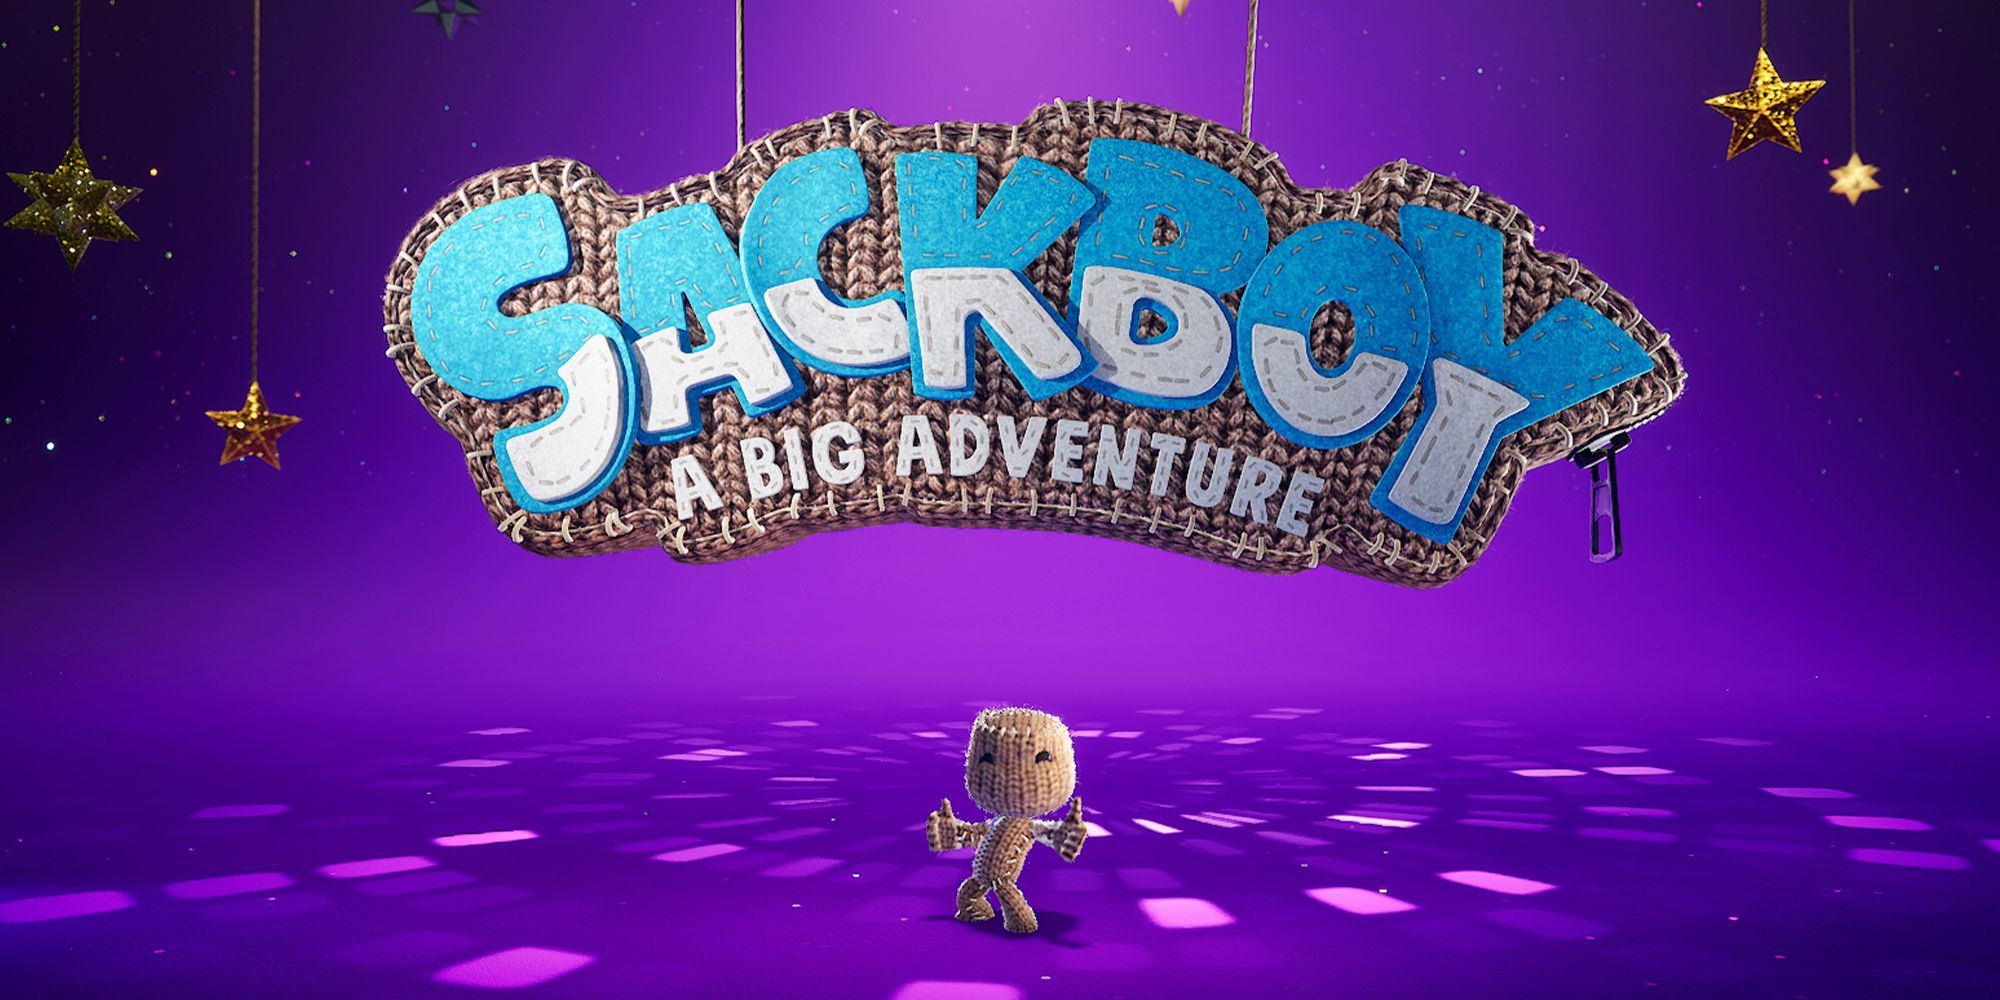 sackboy a big adventure review